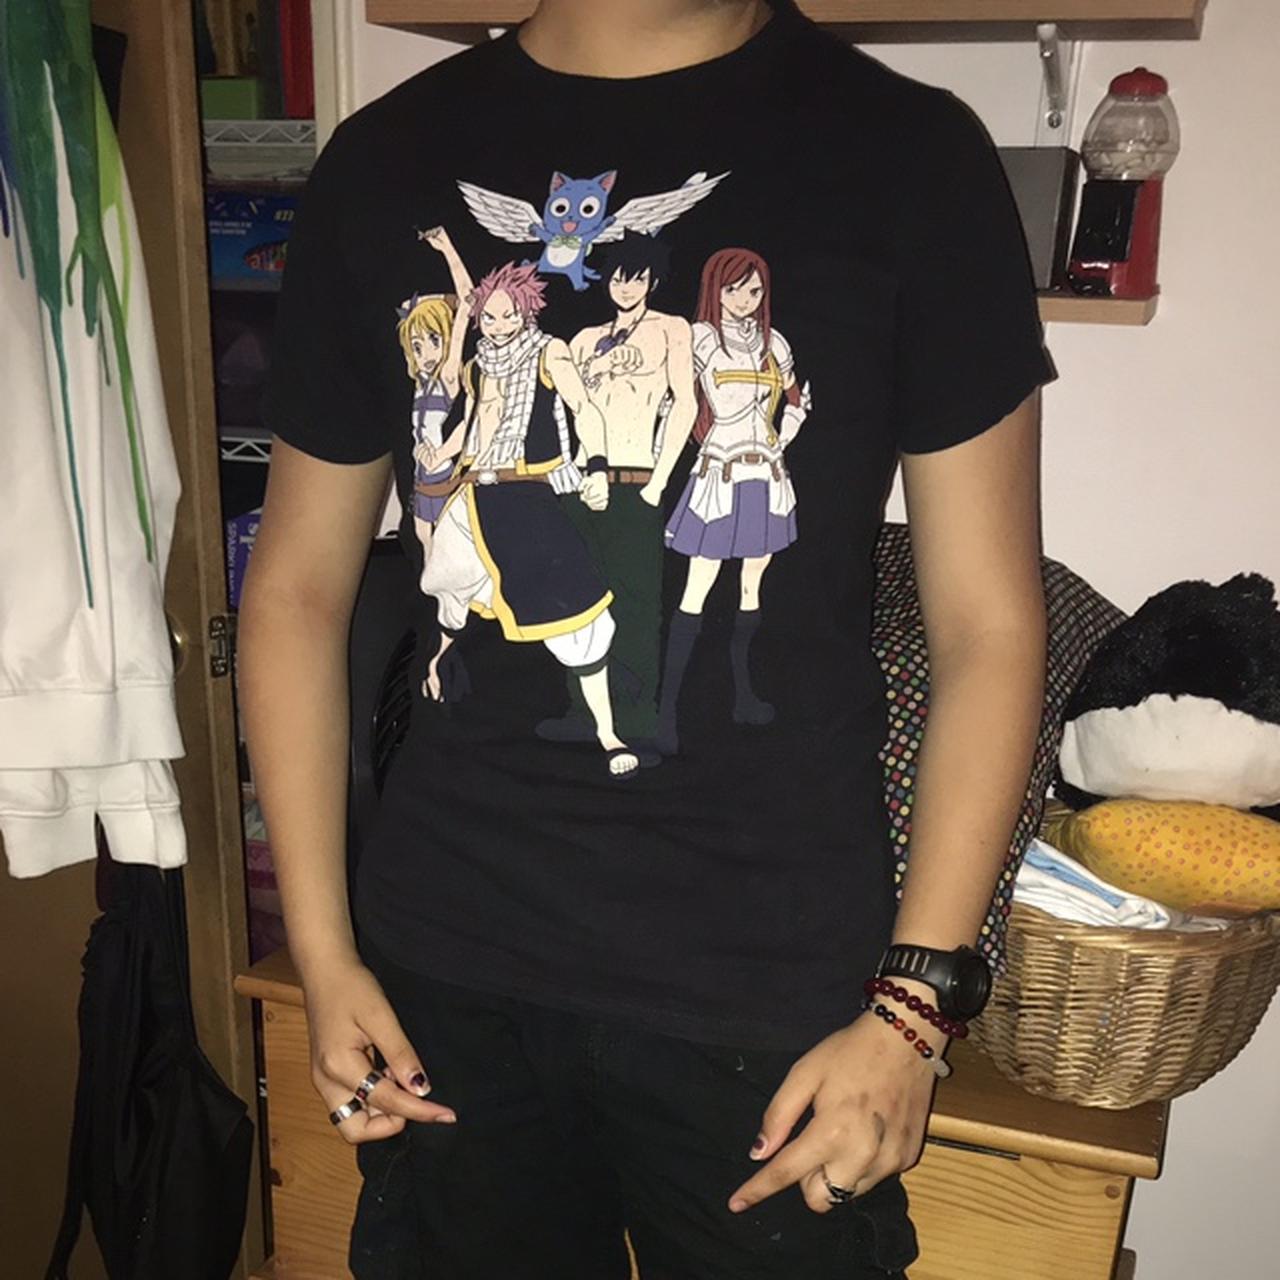 Shop Fairy Tail Shirt Anime online